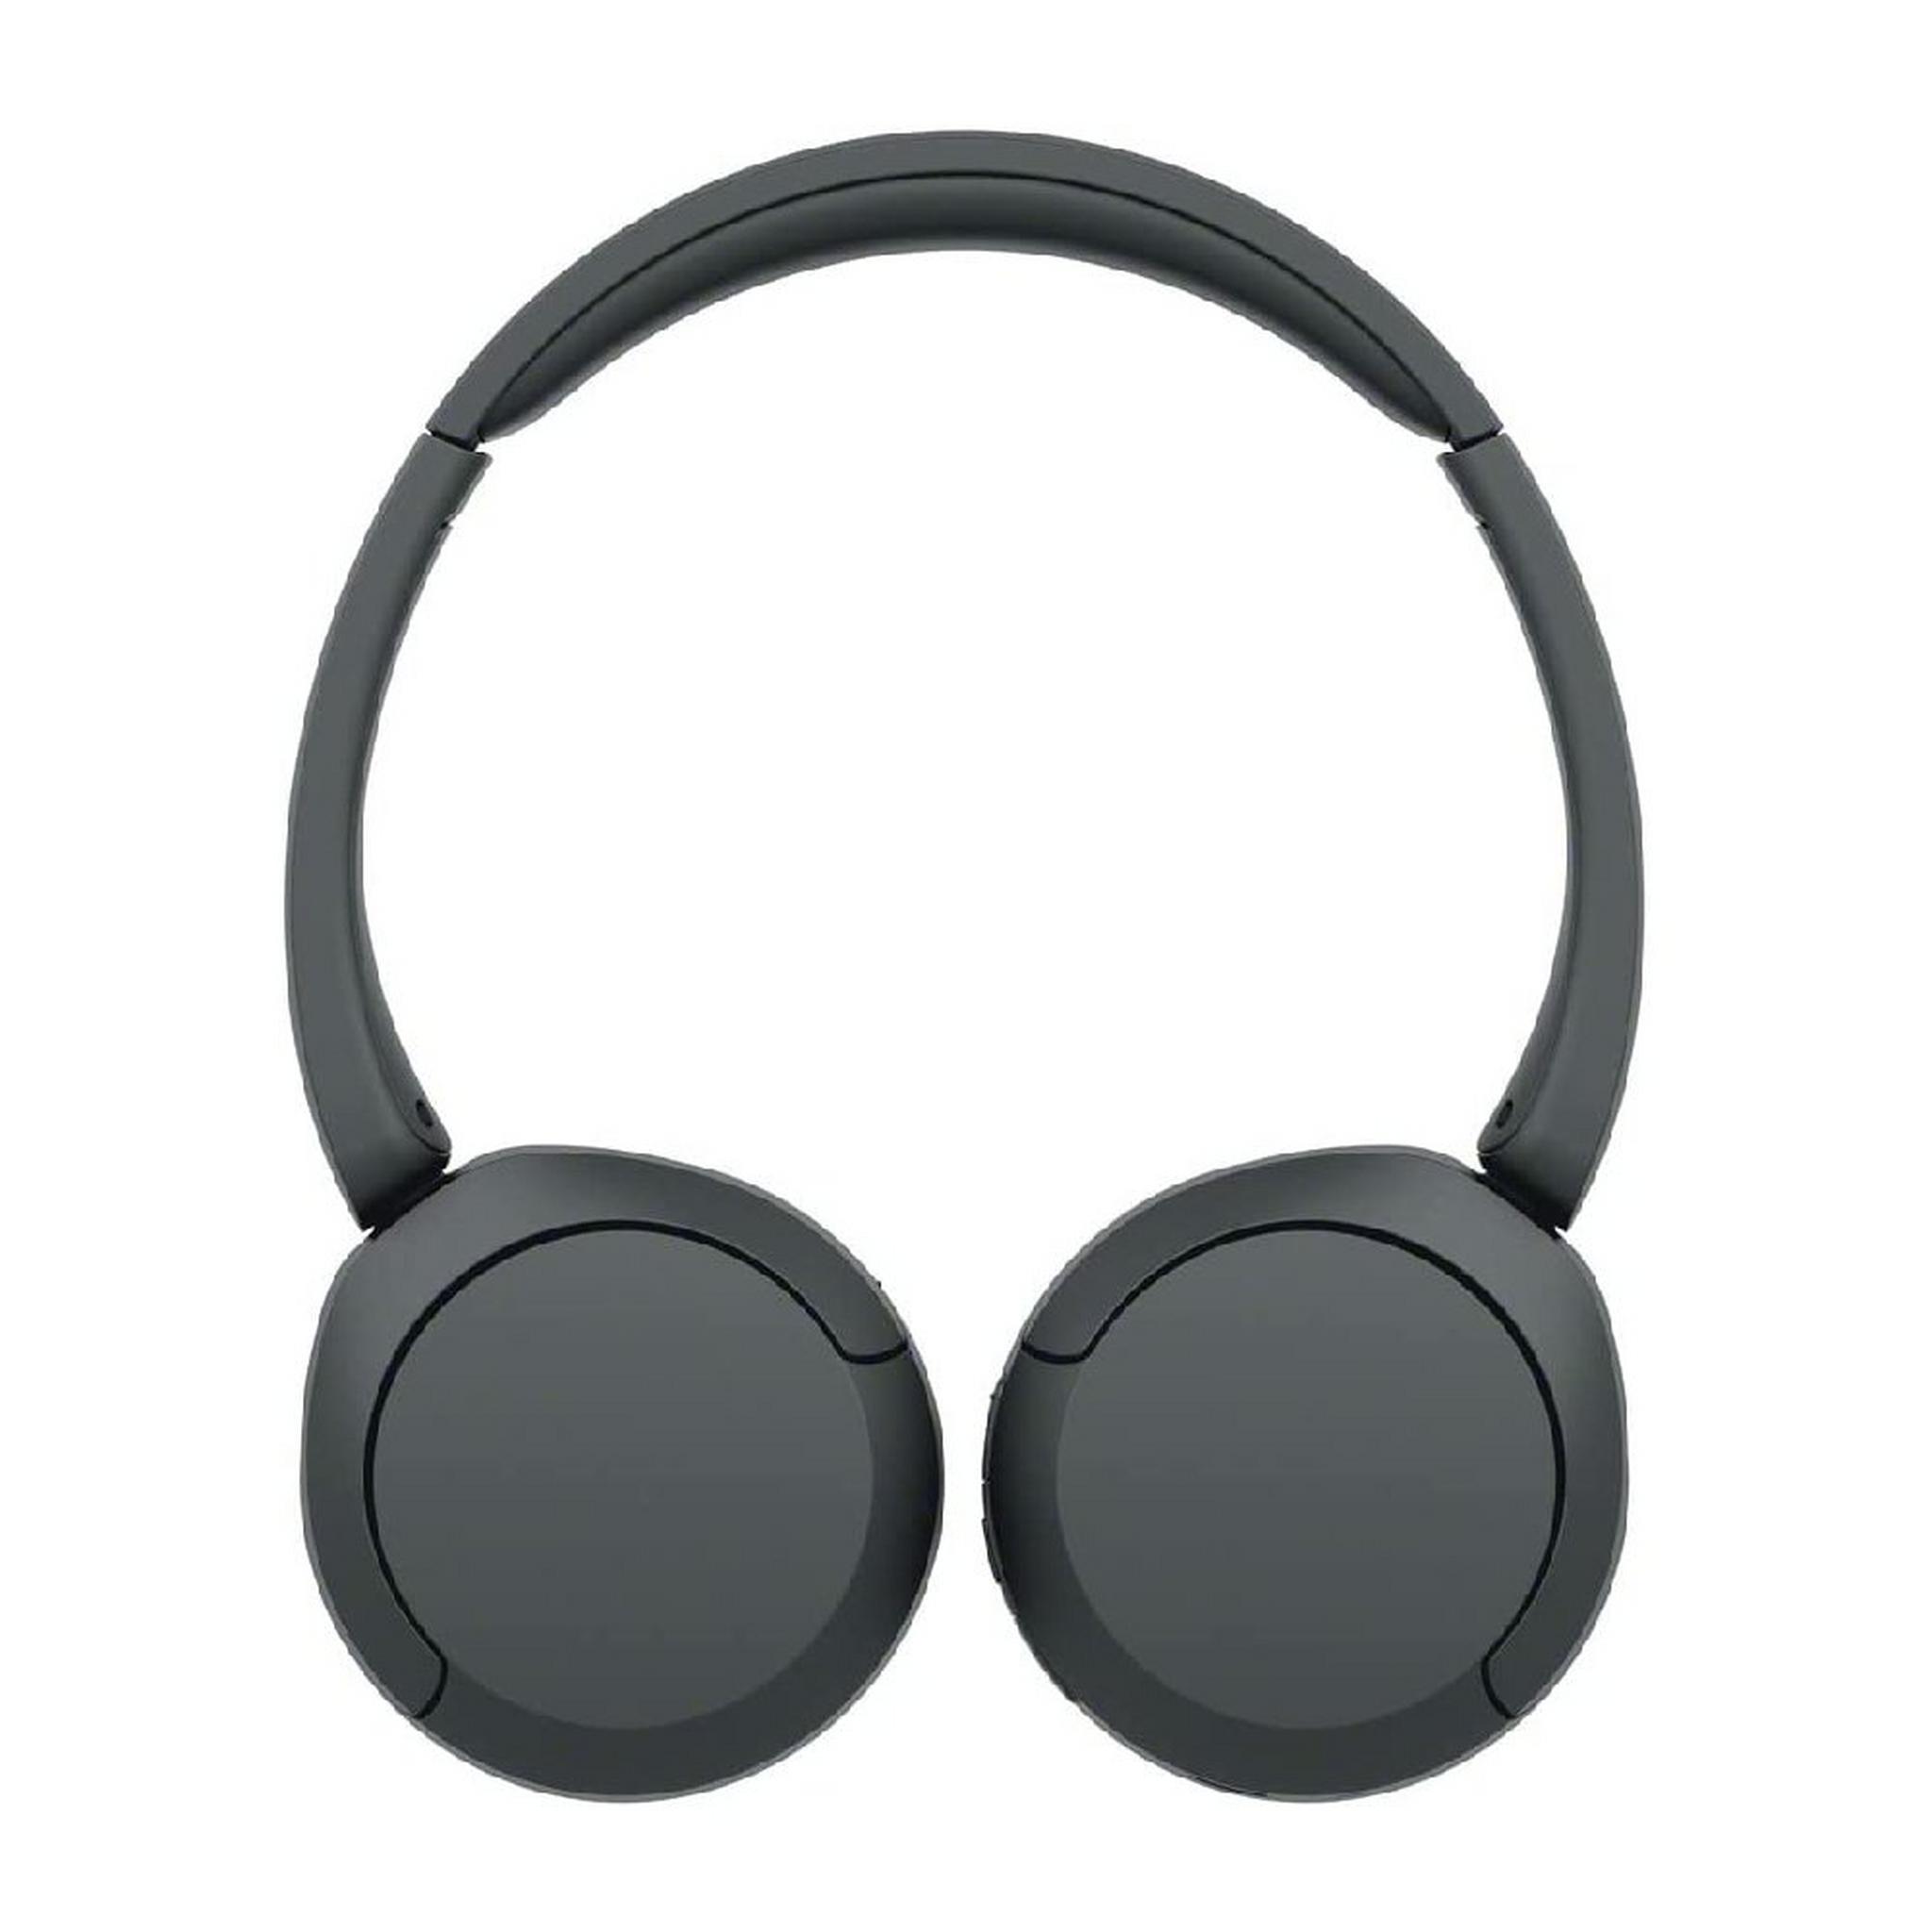 Sony Wireless Headphone with Microphone, WH-CH520/BZE - Black